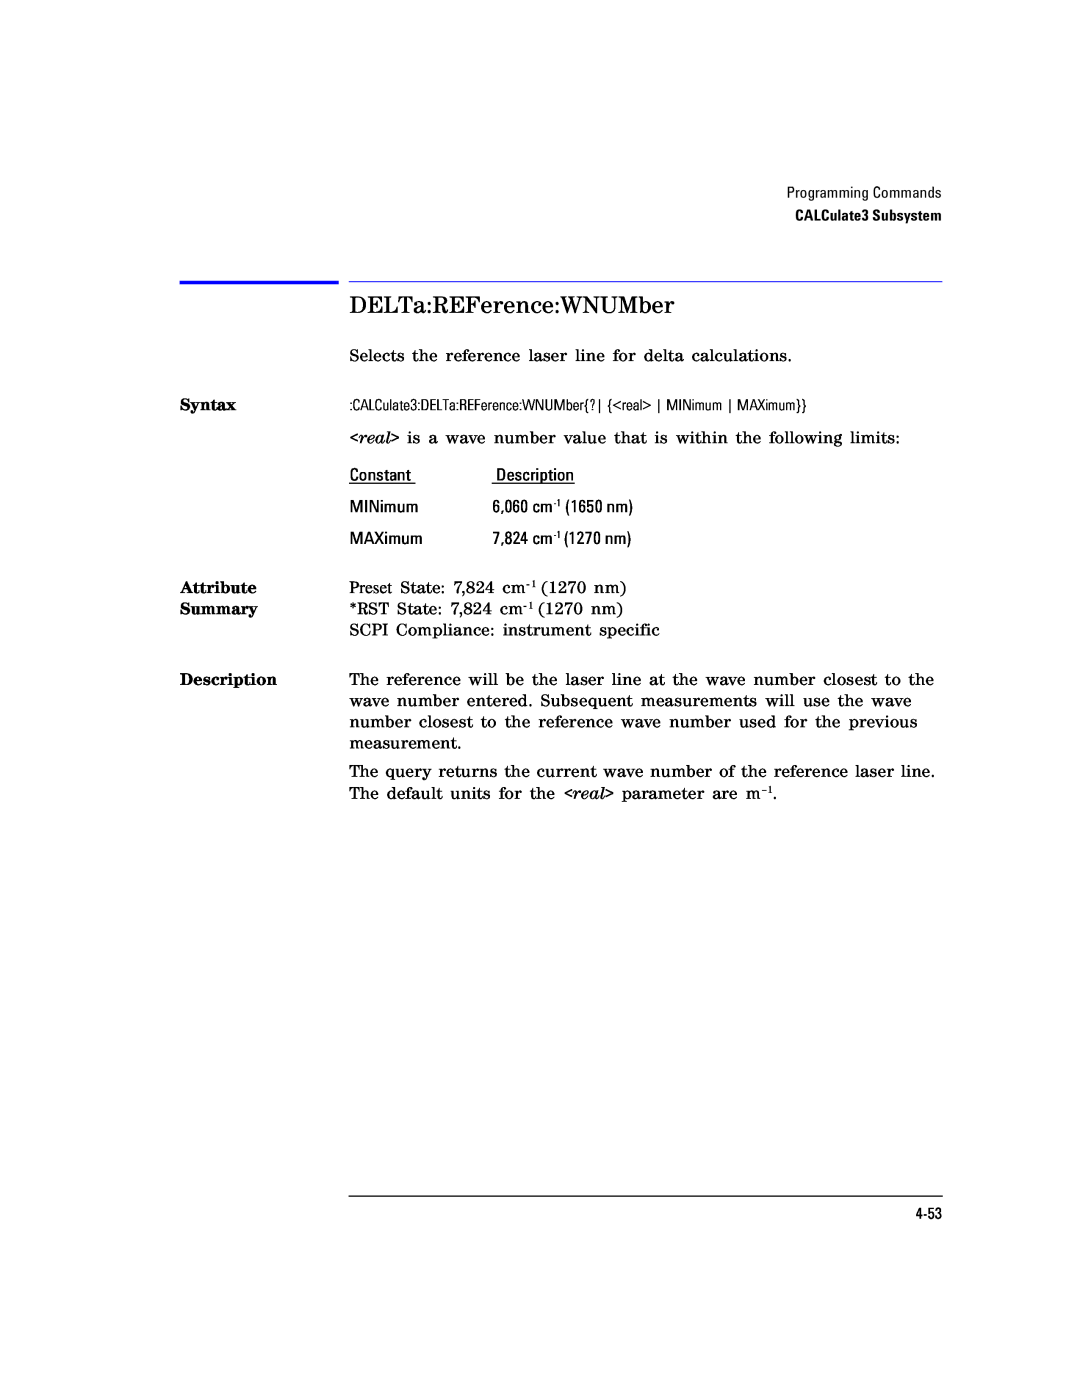 Agilent Technologies Agilent 86120C manual DELTaREFerenceWNUMber, Syntax, Attribute, Summary, Description 